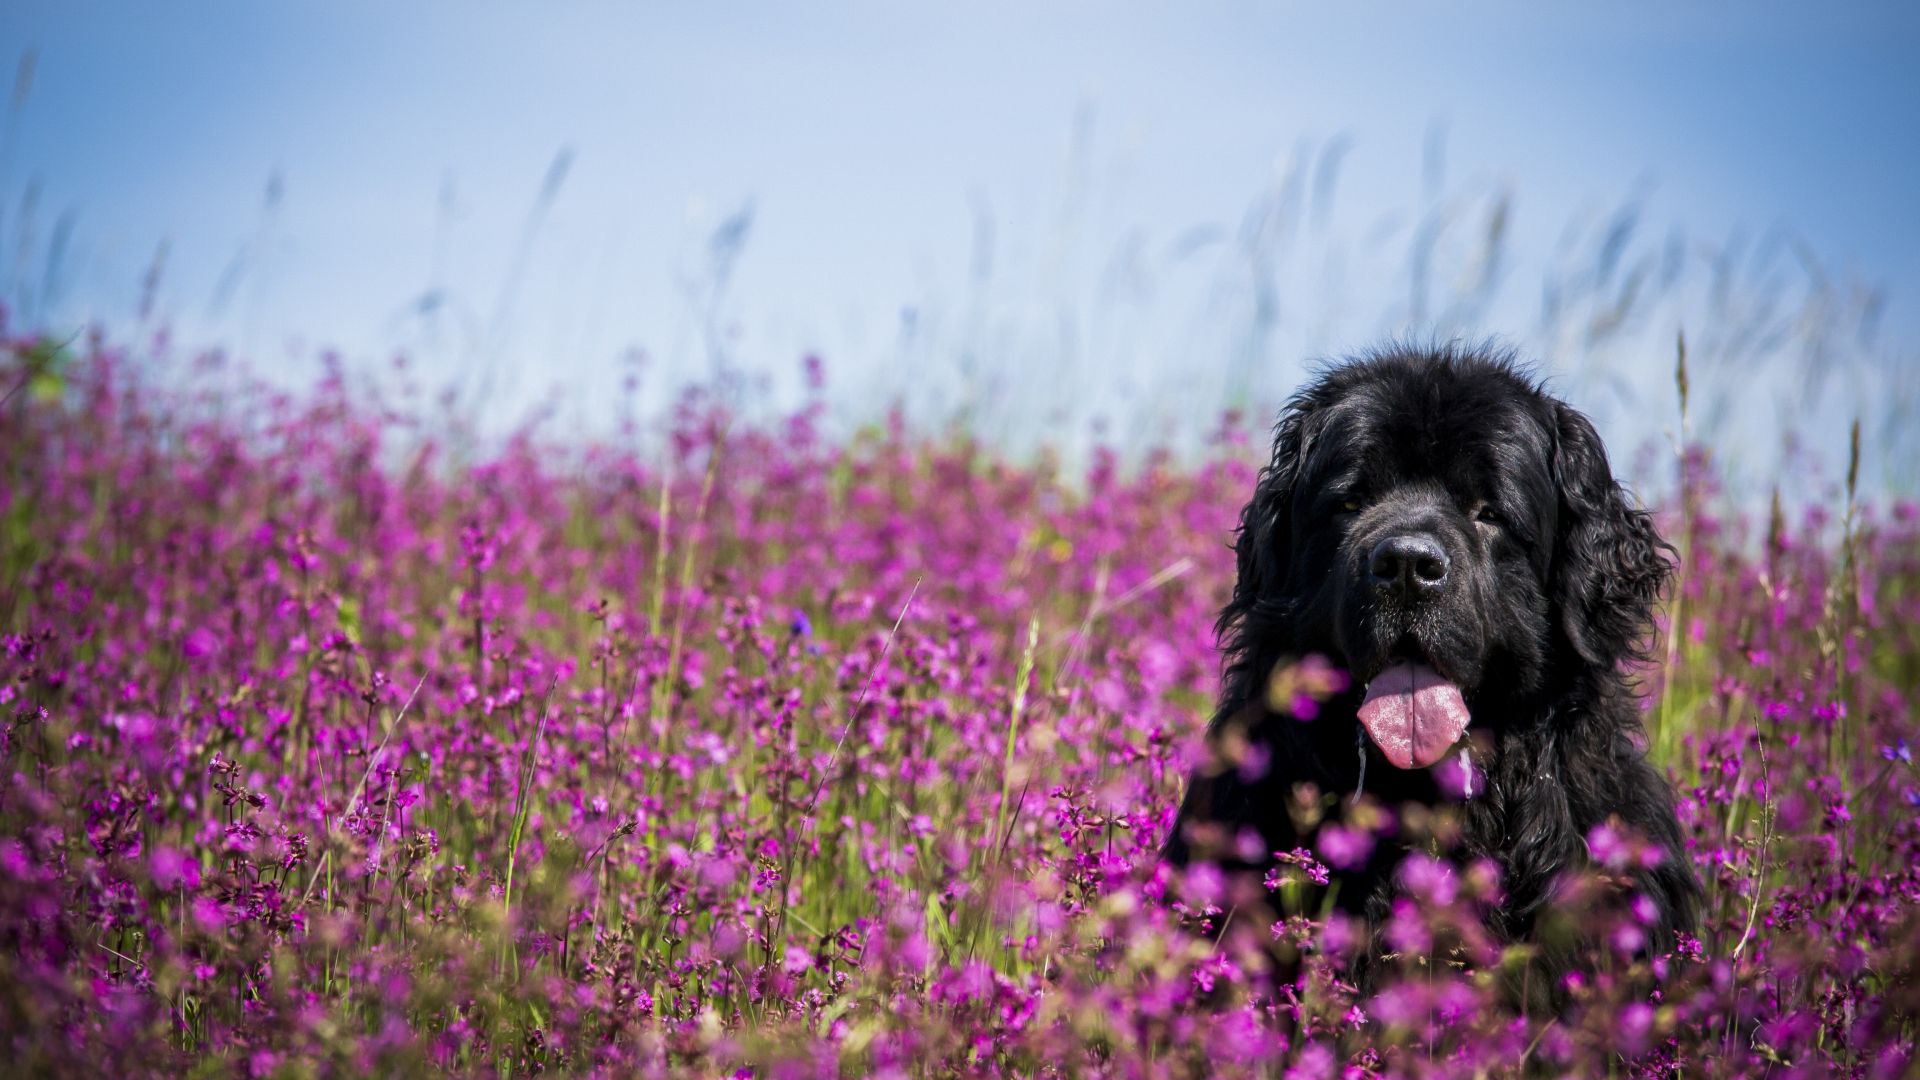 Wallpaper Black dog in grass field